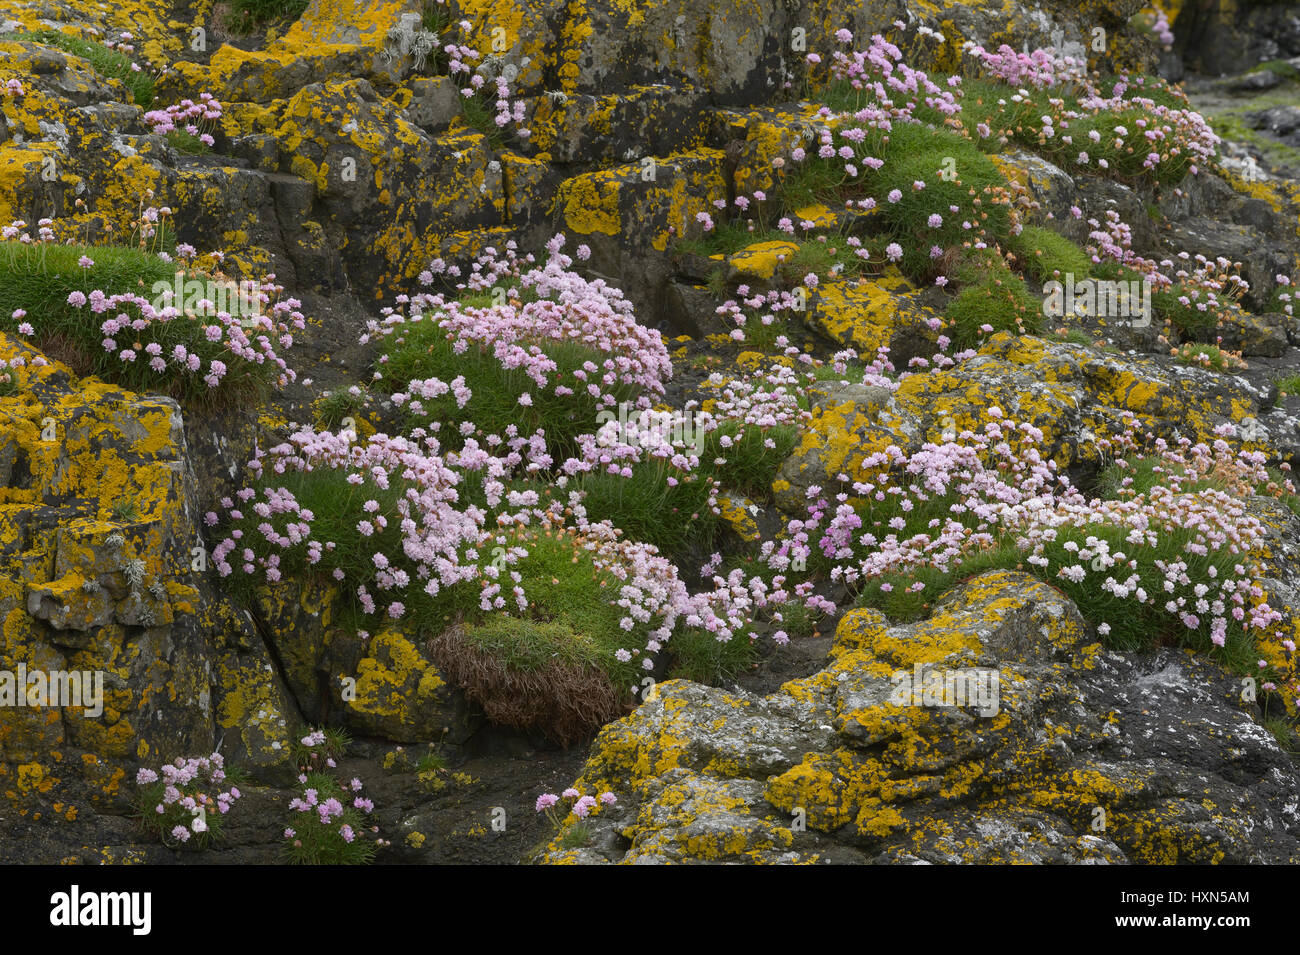 Thrift or sea pink (Armeria maritima) in flower among yellow lichens on seashore, on the isle of Lunga, Treshnish Isles, Scotland. June. Stock Photo